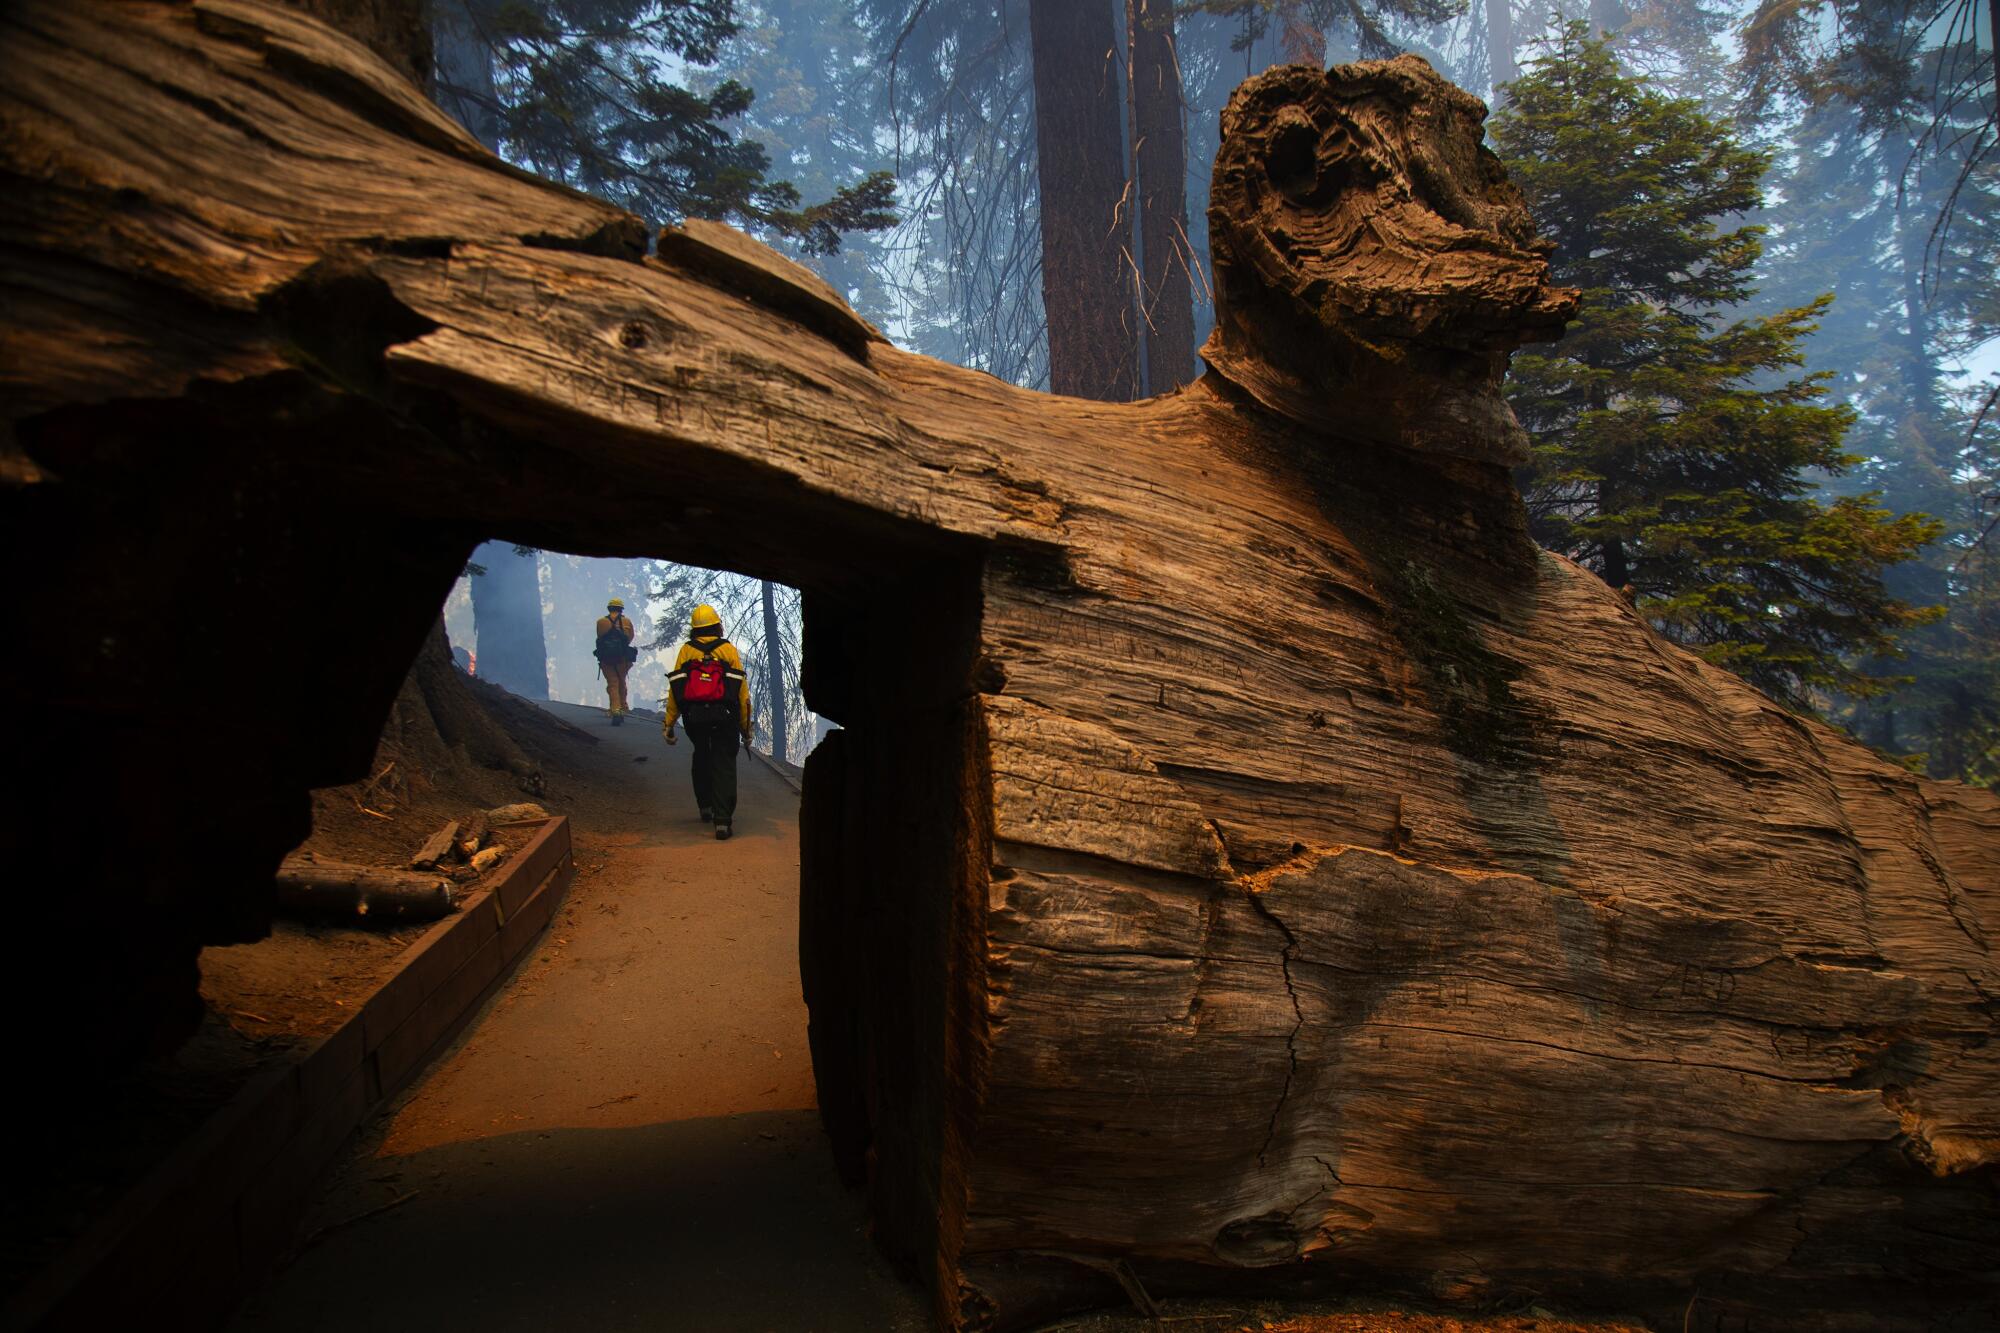 A fallen tree in Sequoia National Park has a path cut through it